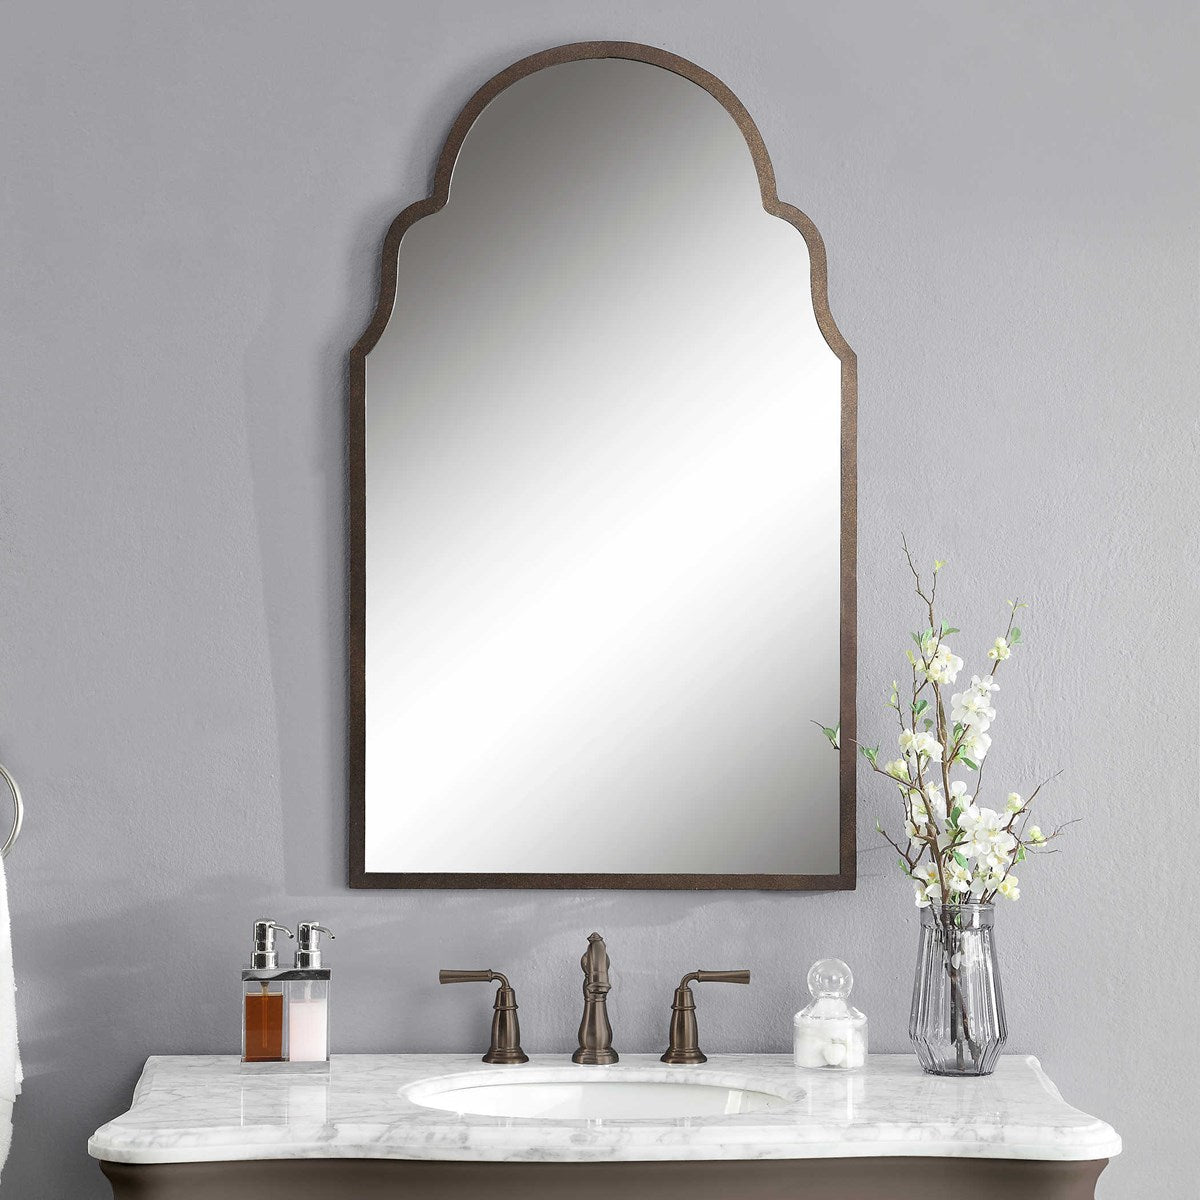 Brayden Arch Metal Mirror-Uttermost-UTTM-12668 P-Mirrors-2-France and Son